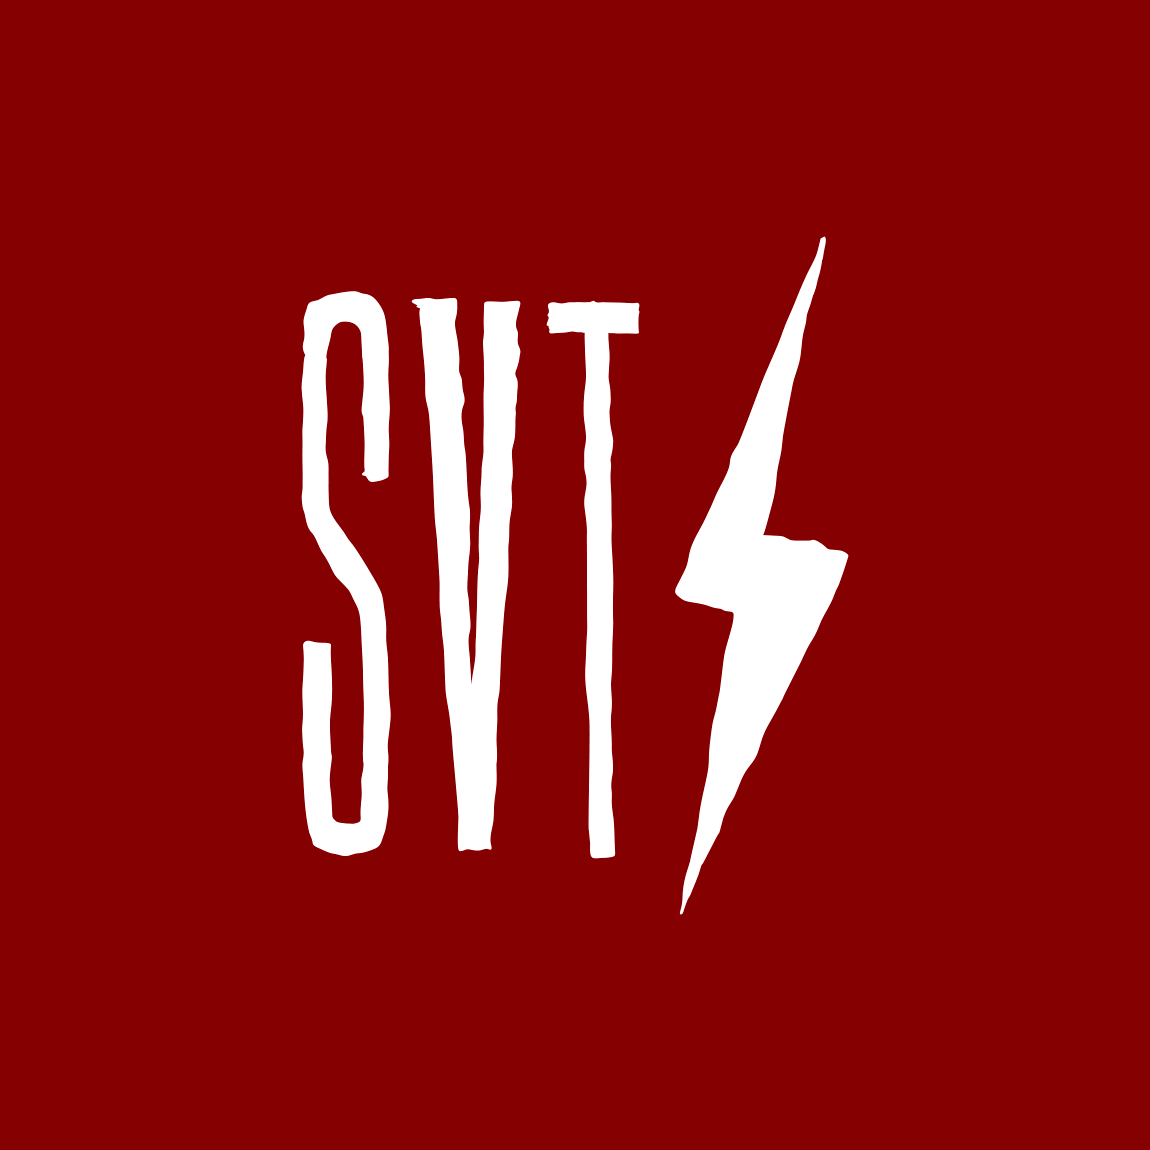 Updated+SVT+logo+2020.png